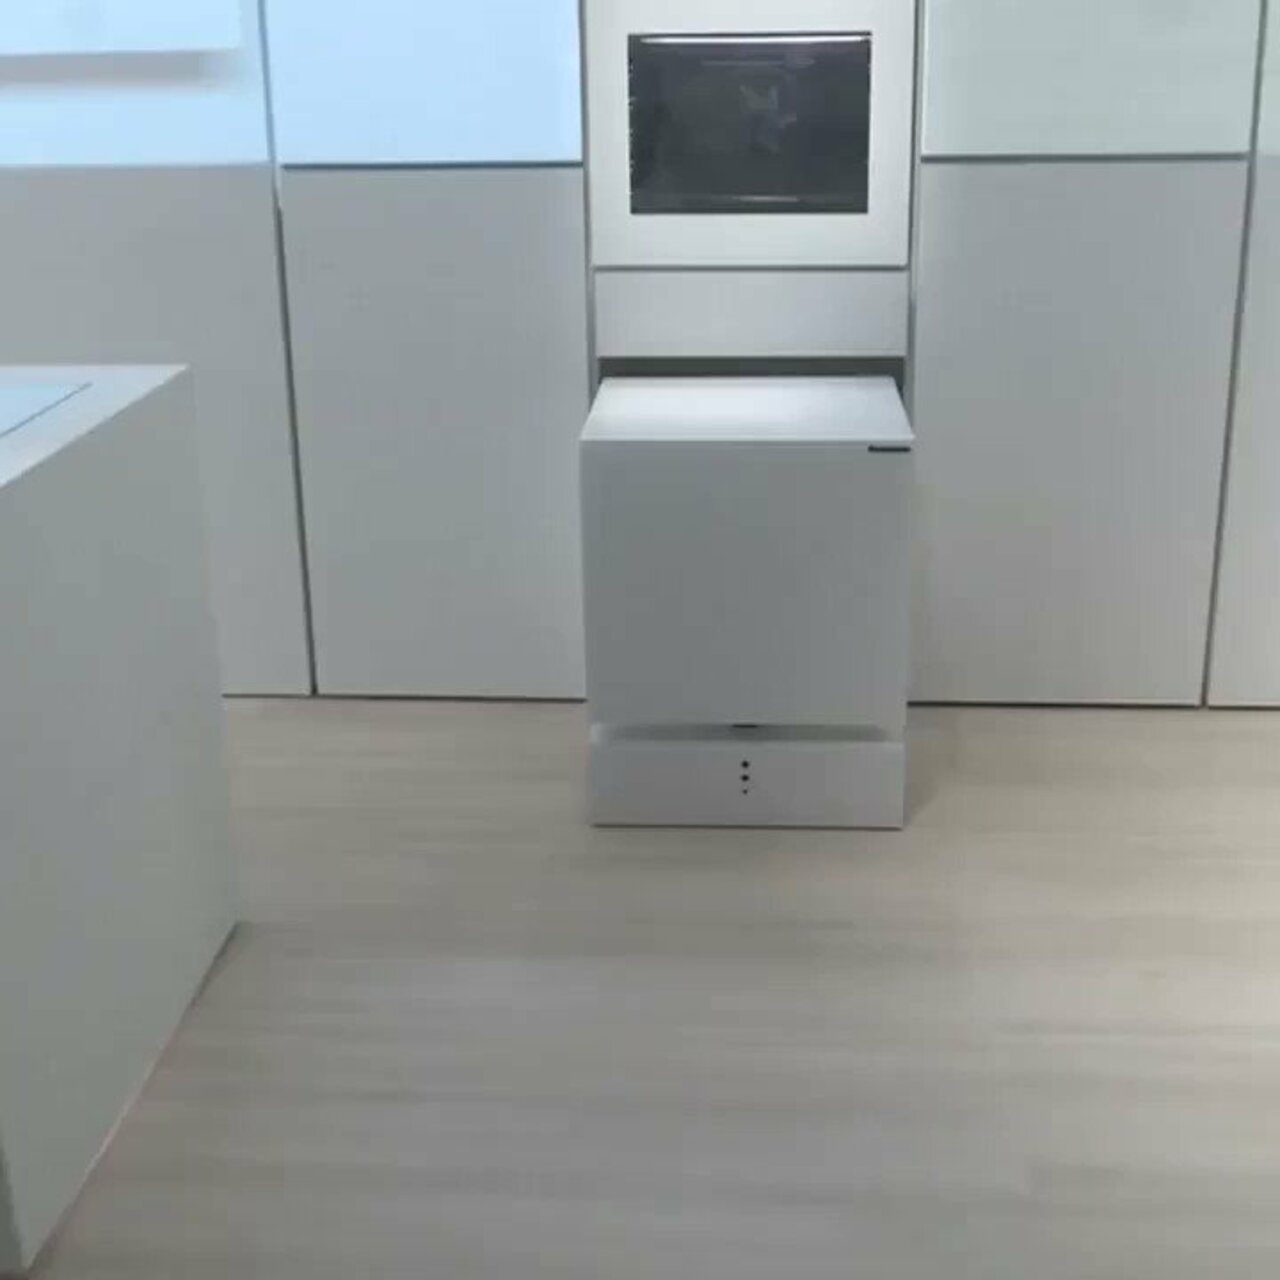 The fridge brings your food to you! by @techinsider #BigData #Innovation #artificialintelligence cc: @mvollmer1 @hugodevotion @mgualtieri @jenstirrup @shannonplatz https://t.co/gmM8HTlvfX